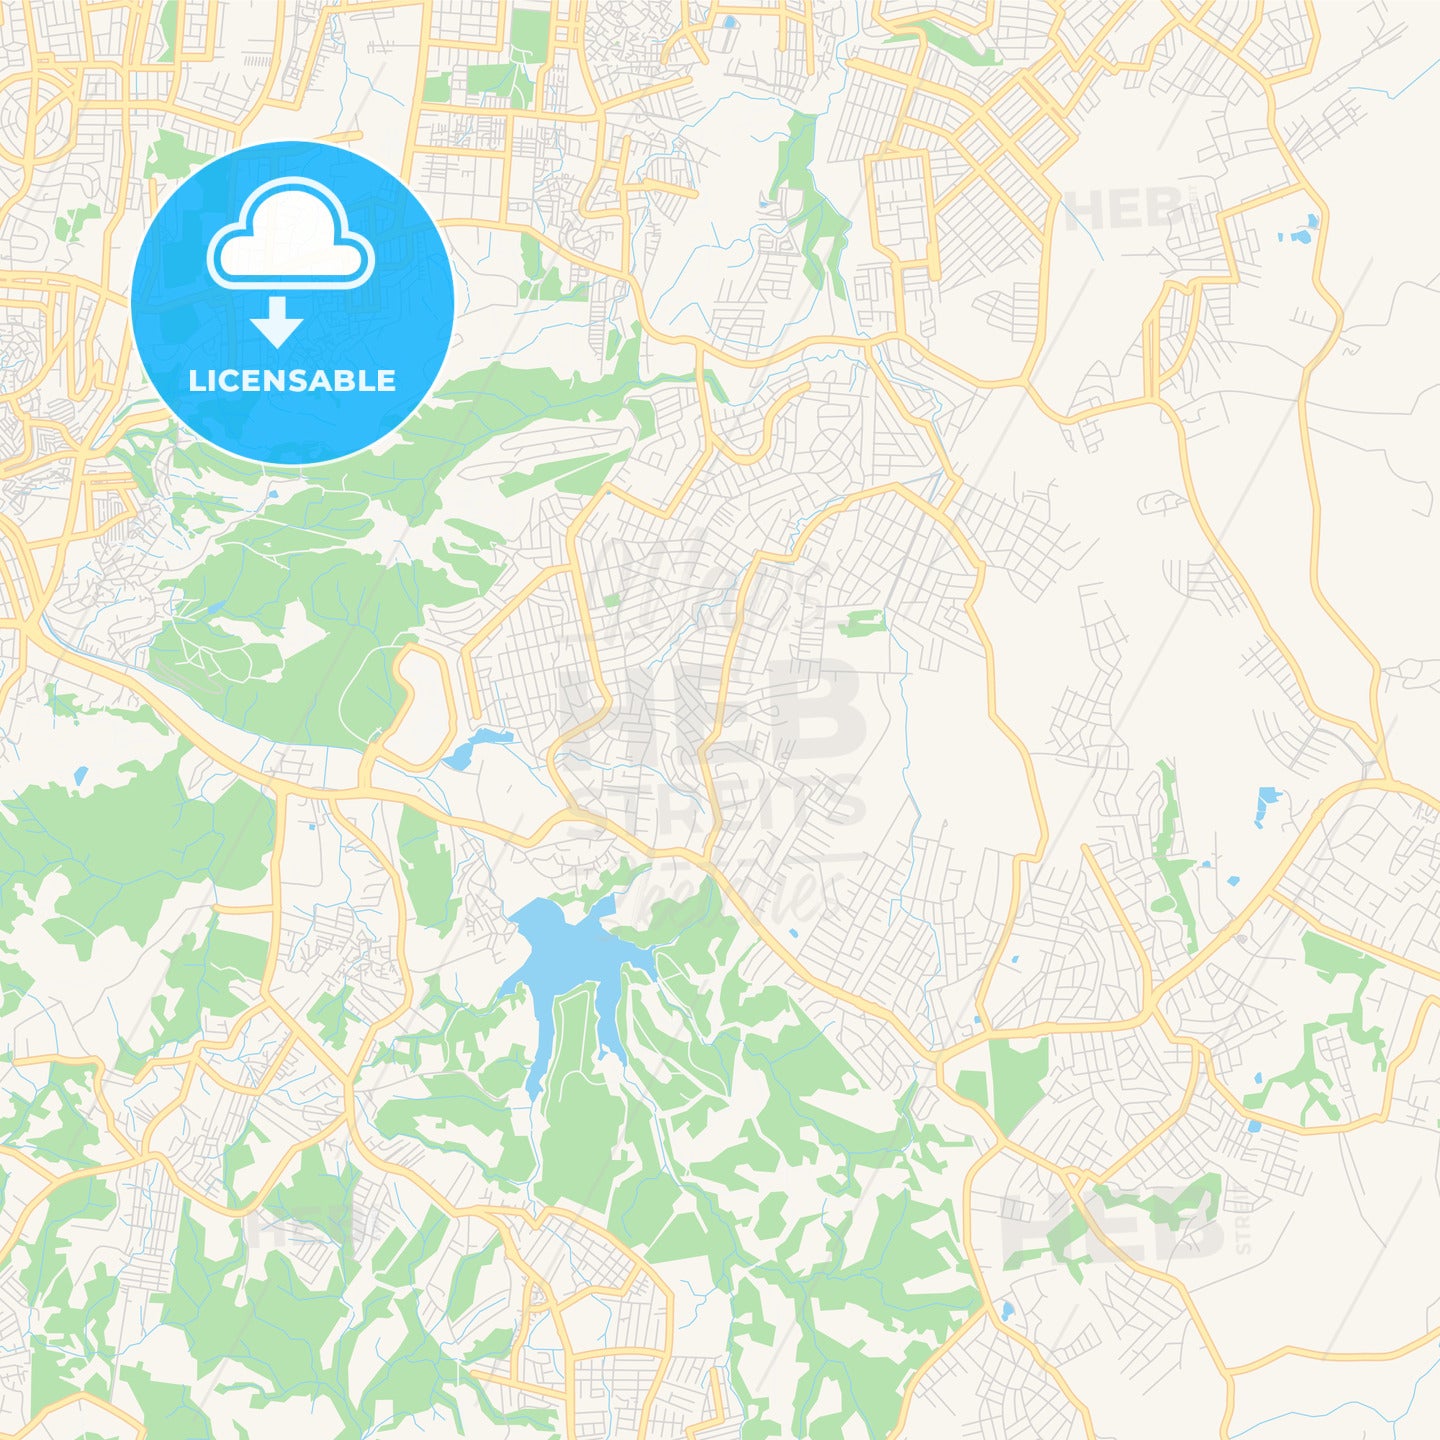 Printable street map of Viamao, Brazil